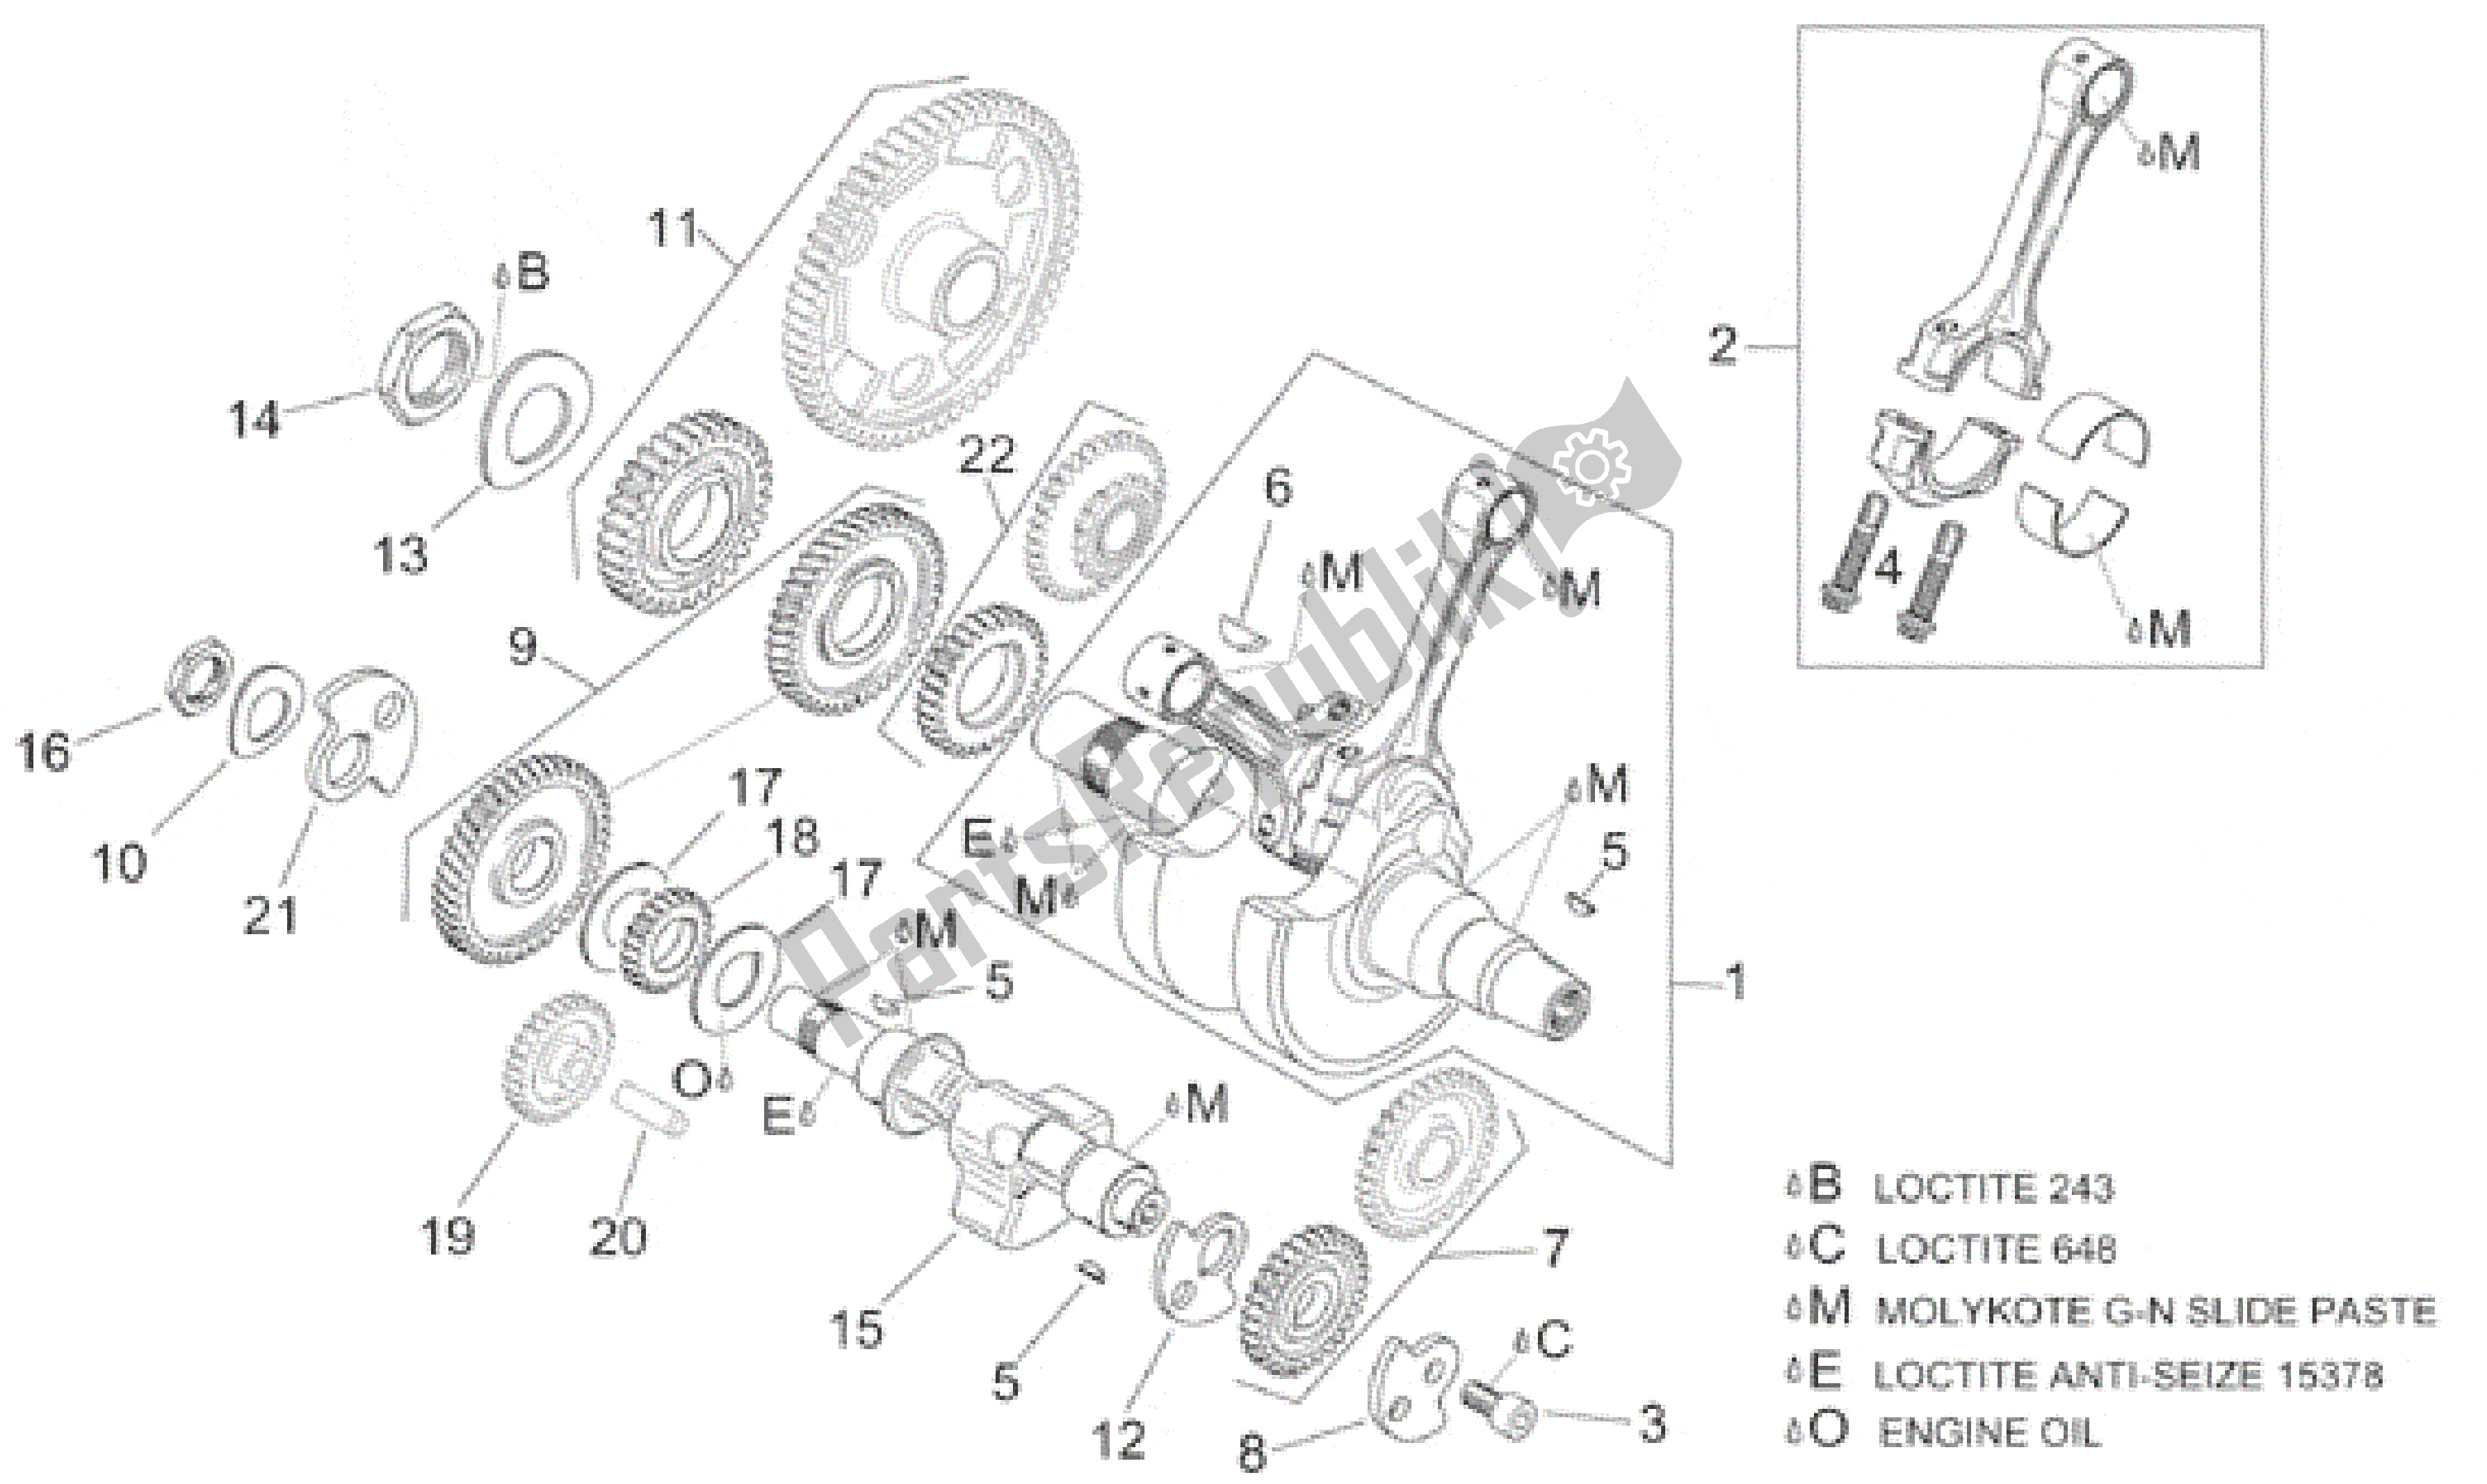 All parts for the Crankshaft I of the Aprilia RSV Mille 3901 1000 2001 - 2002